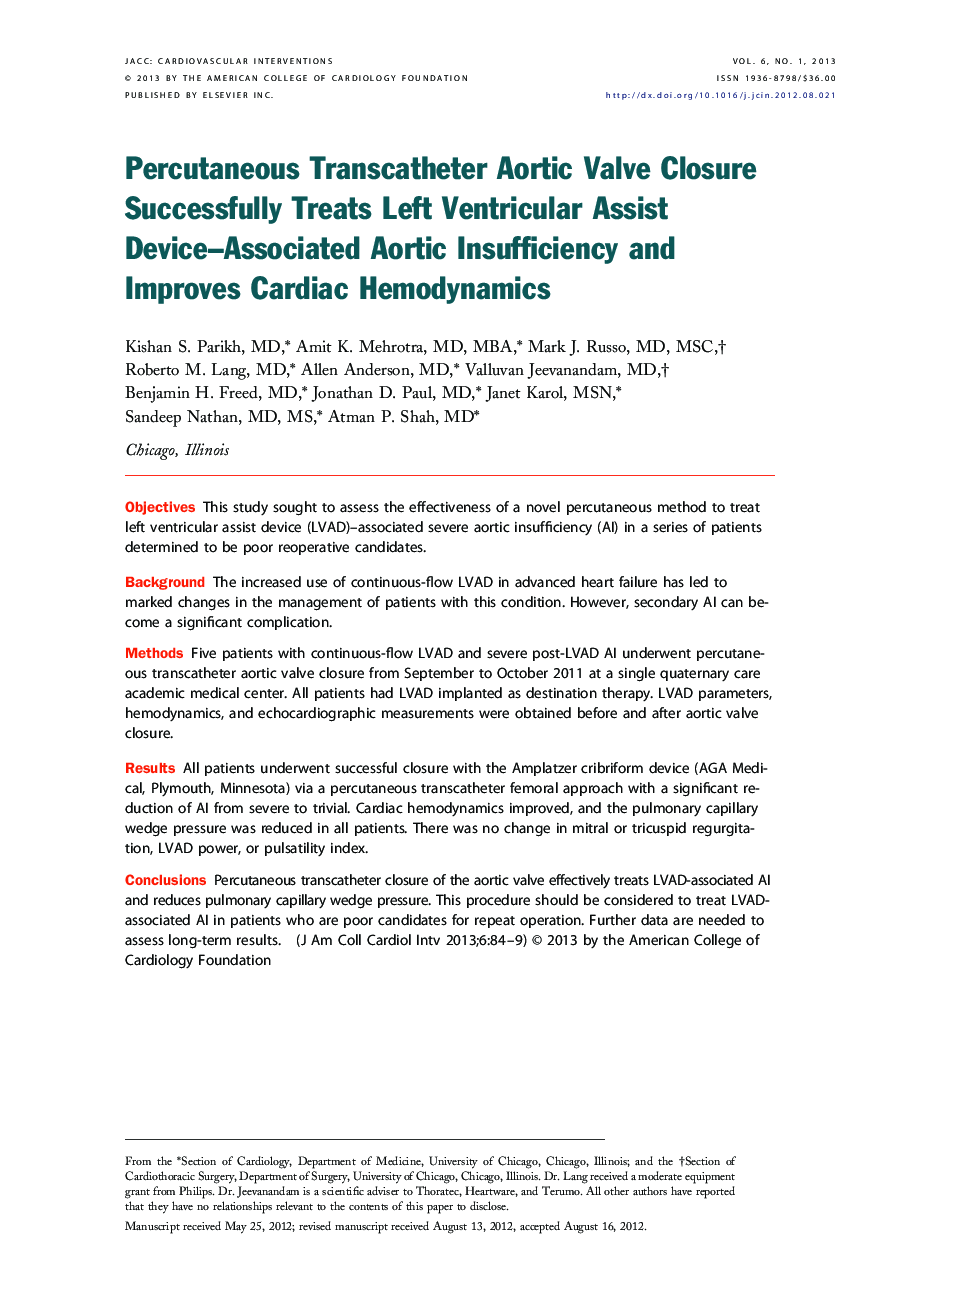 Percutaneous Transcatheter Aortic Valve Closure Successfully Treats Left Ventricular Assist Device–Associated Aortic Insufficiency and Improves Cardiac Hemodynamics 